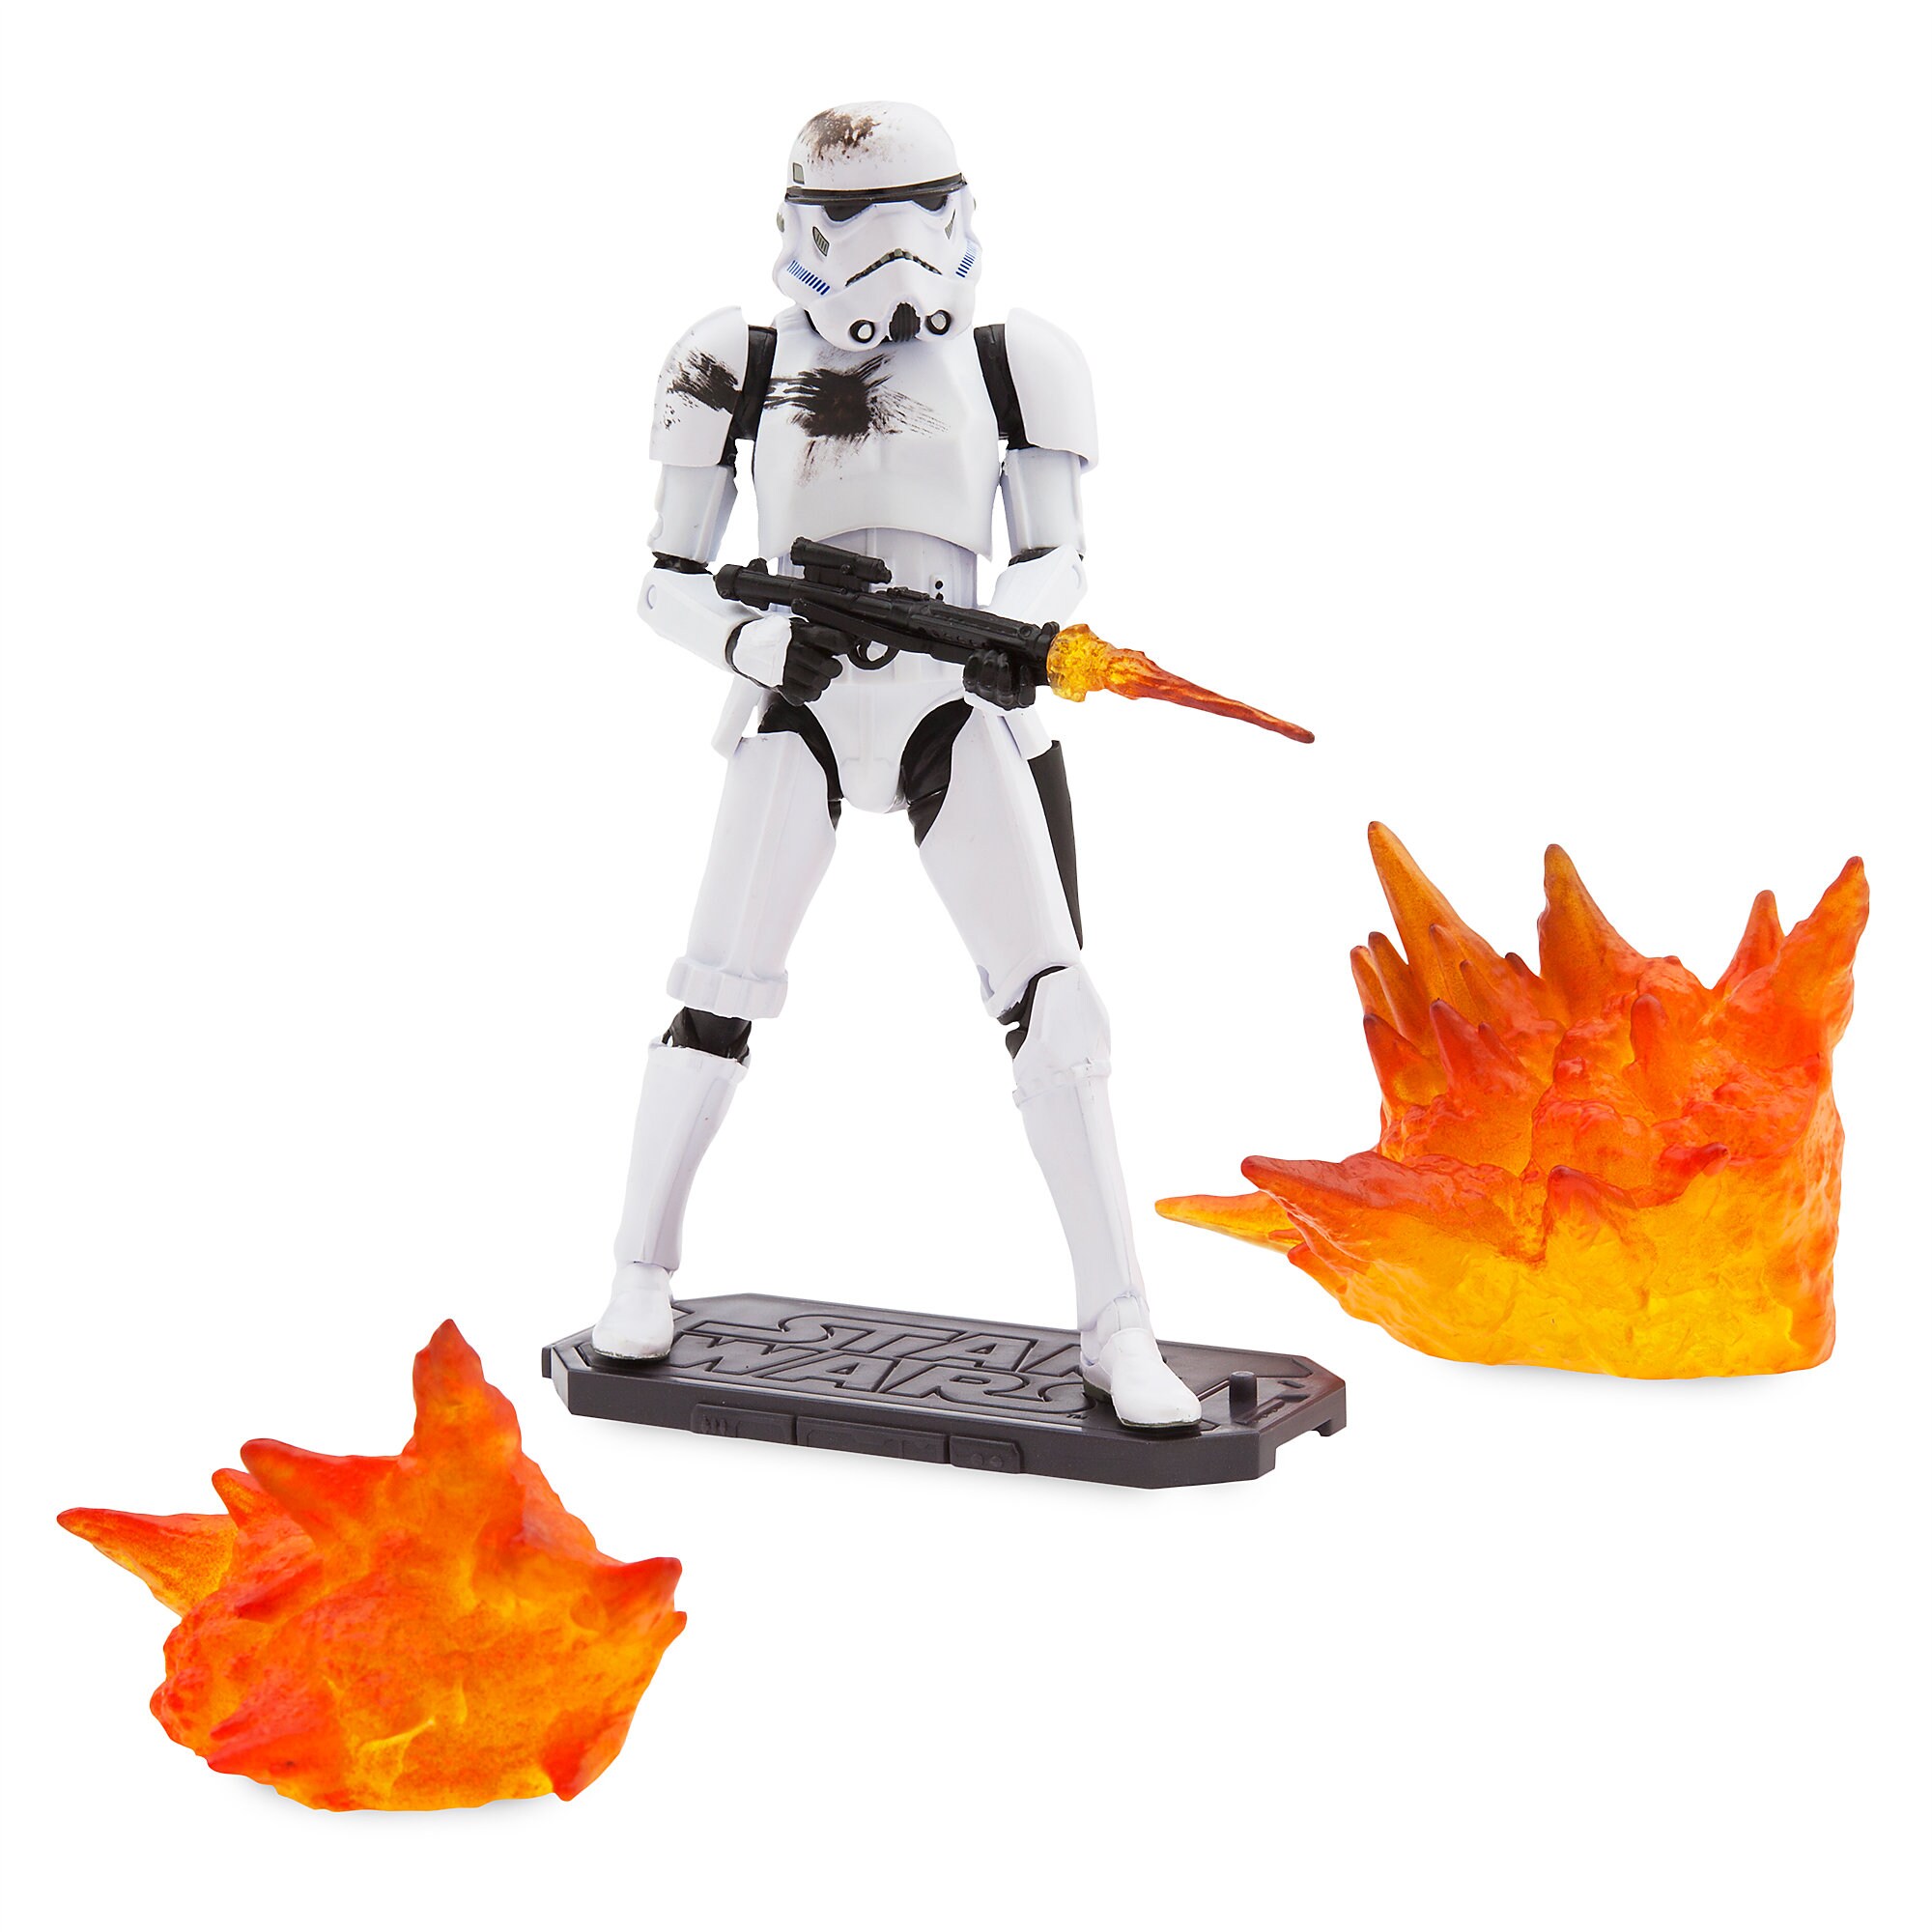 Stormtrooper Action Figure - Star Wars - Black Series by Hasbro